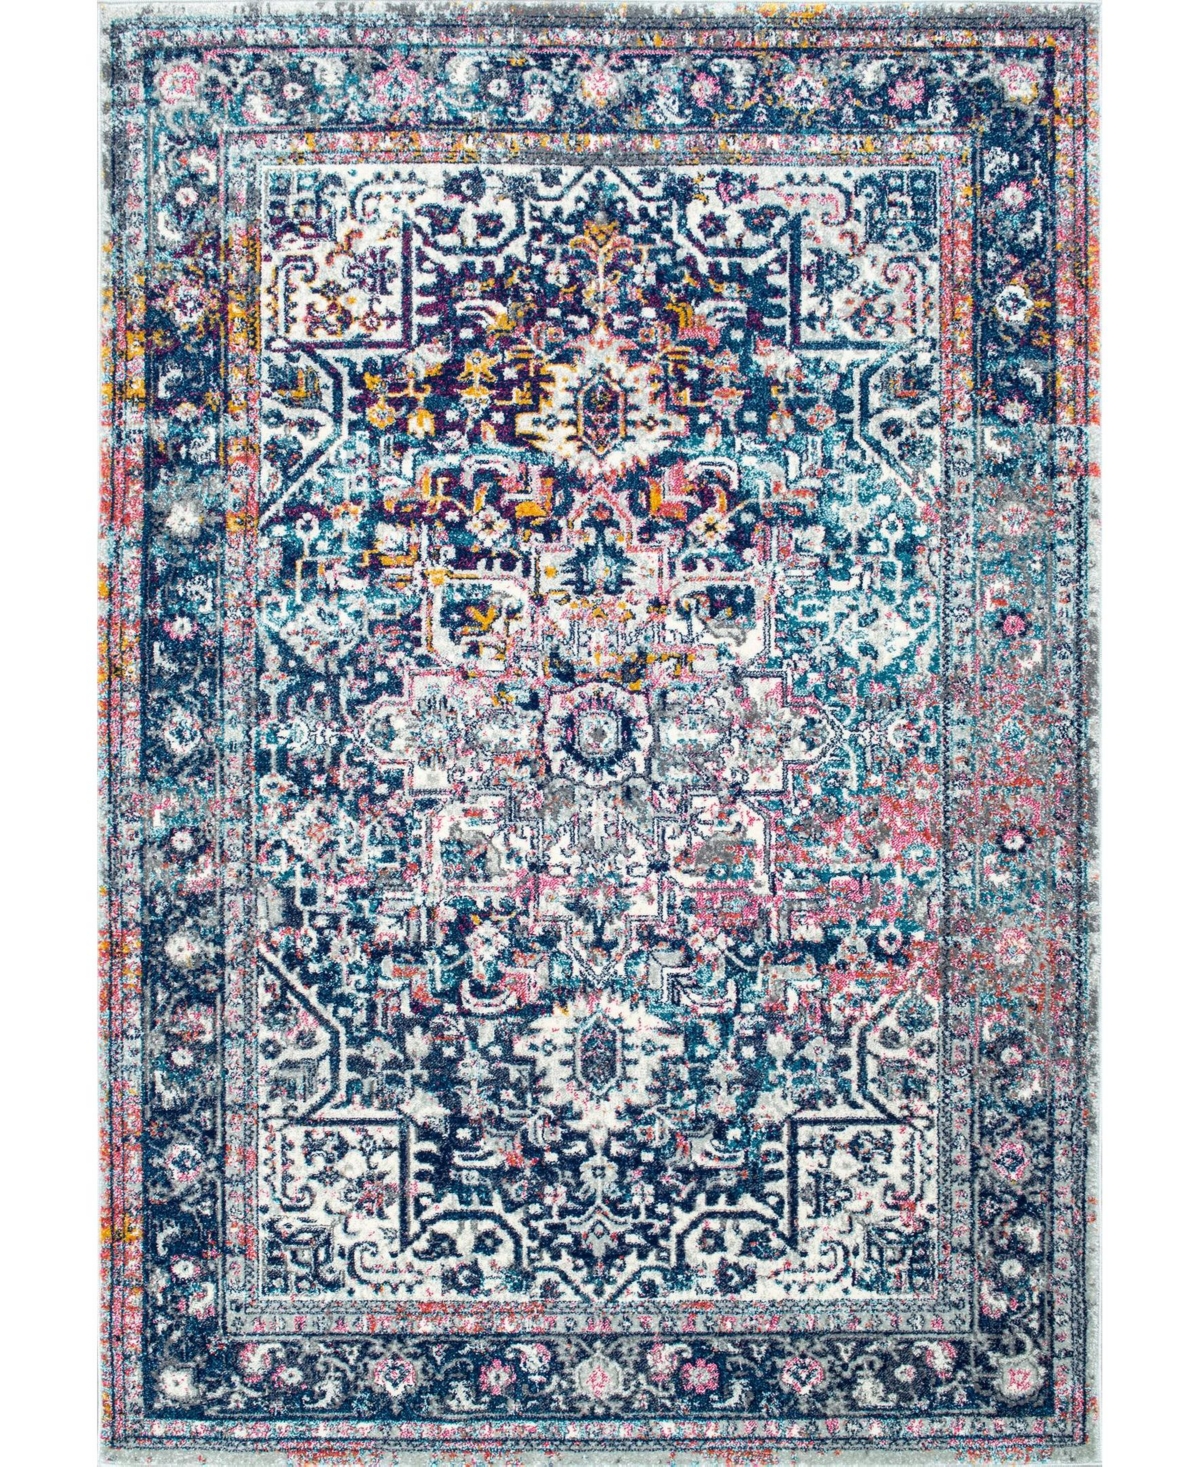 nuLoom Bodrum Persian Vintage-Inspired Raylene Blue 6'7in x 9' Area Rug - Blue